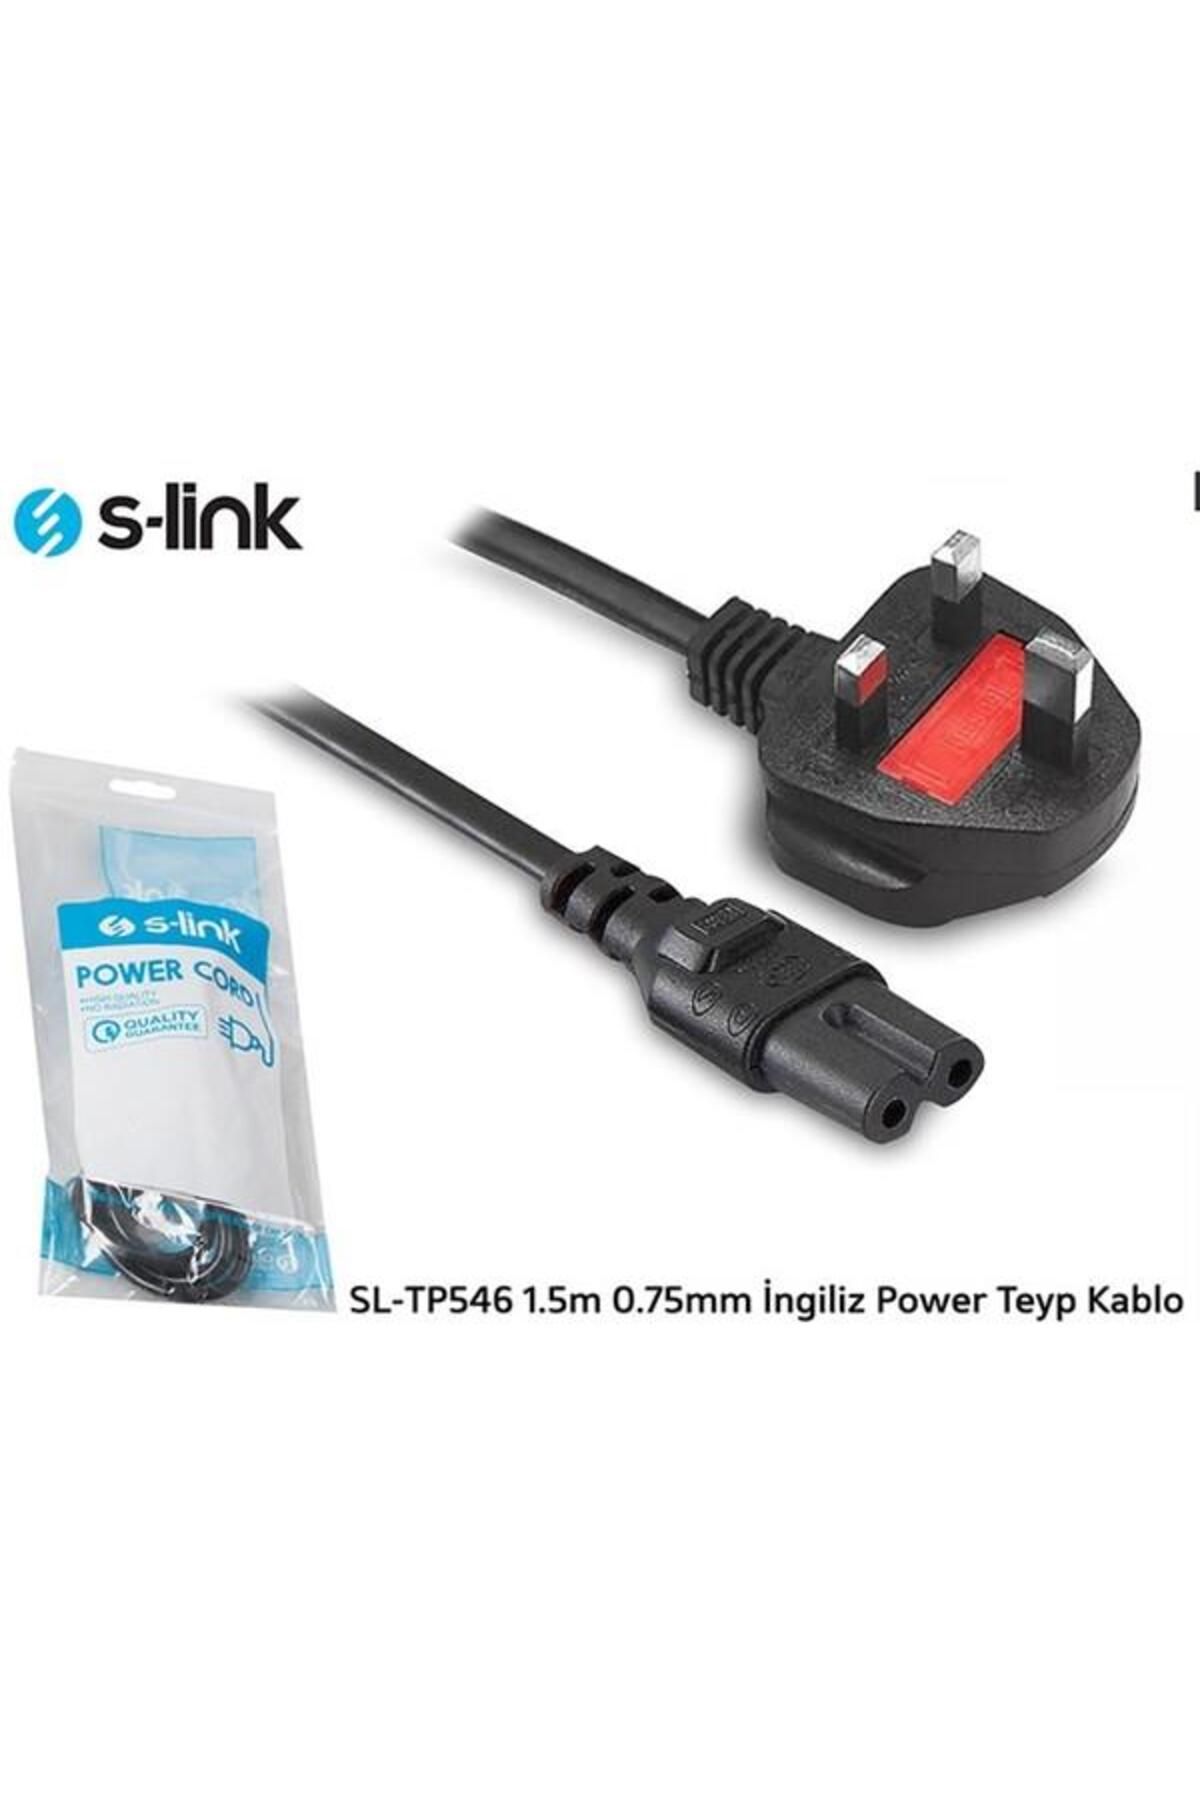 S-Link SL-TP546 1.5m 0.75mm İngiliz Power Teyp Kablo